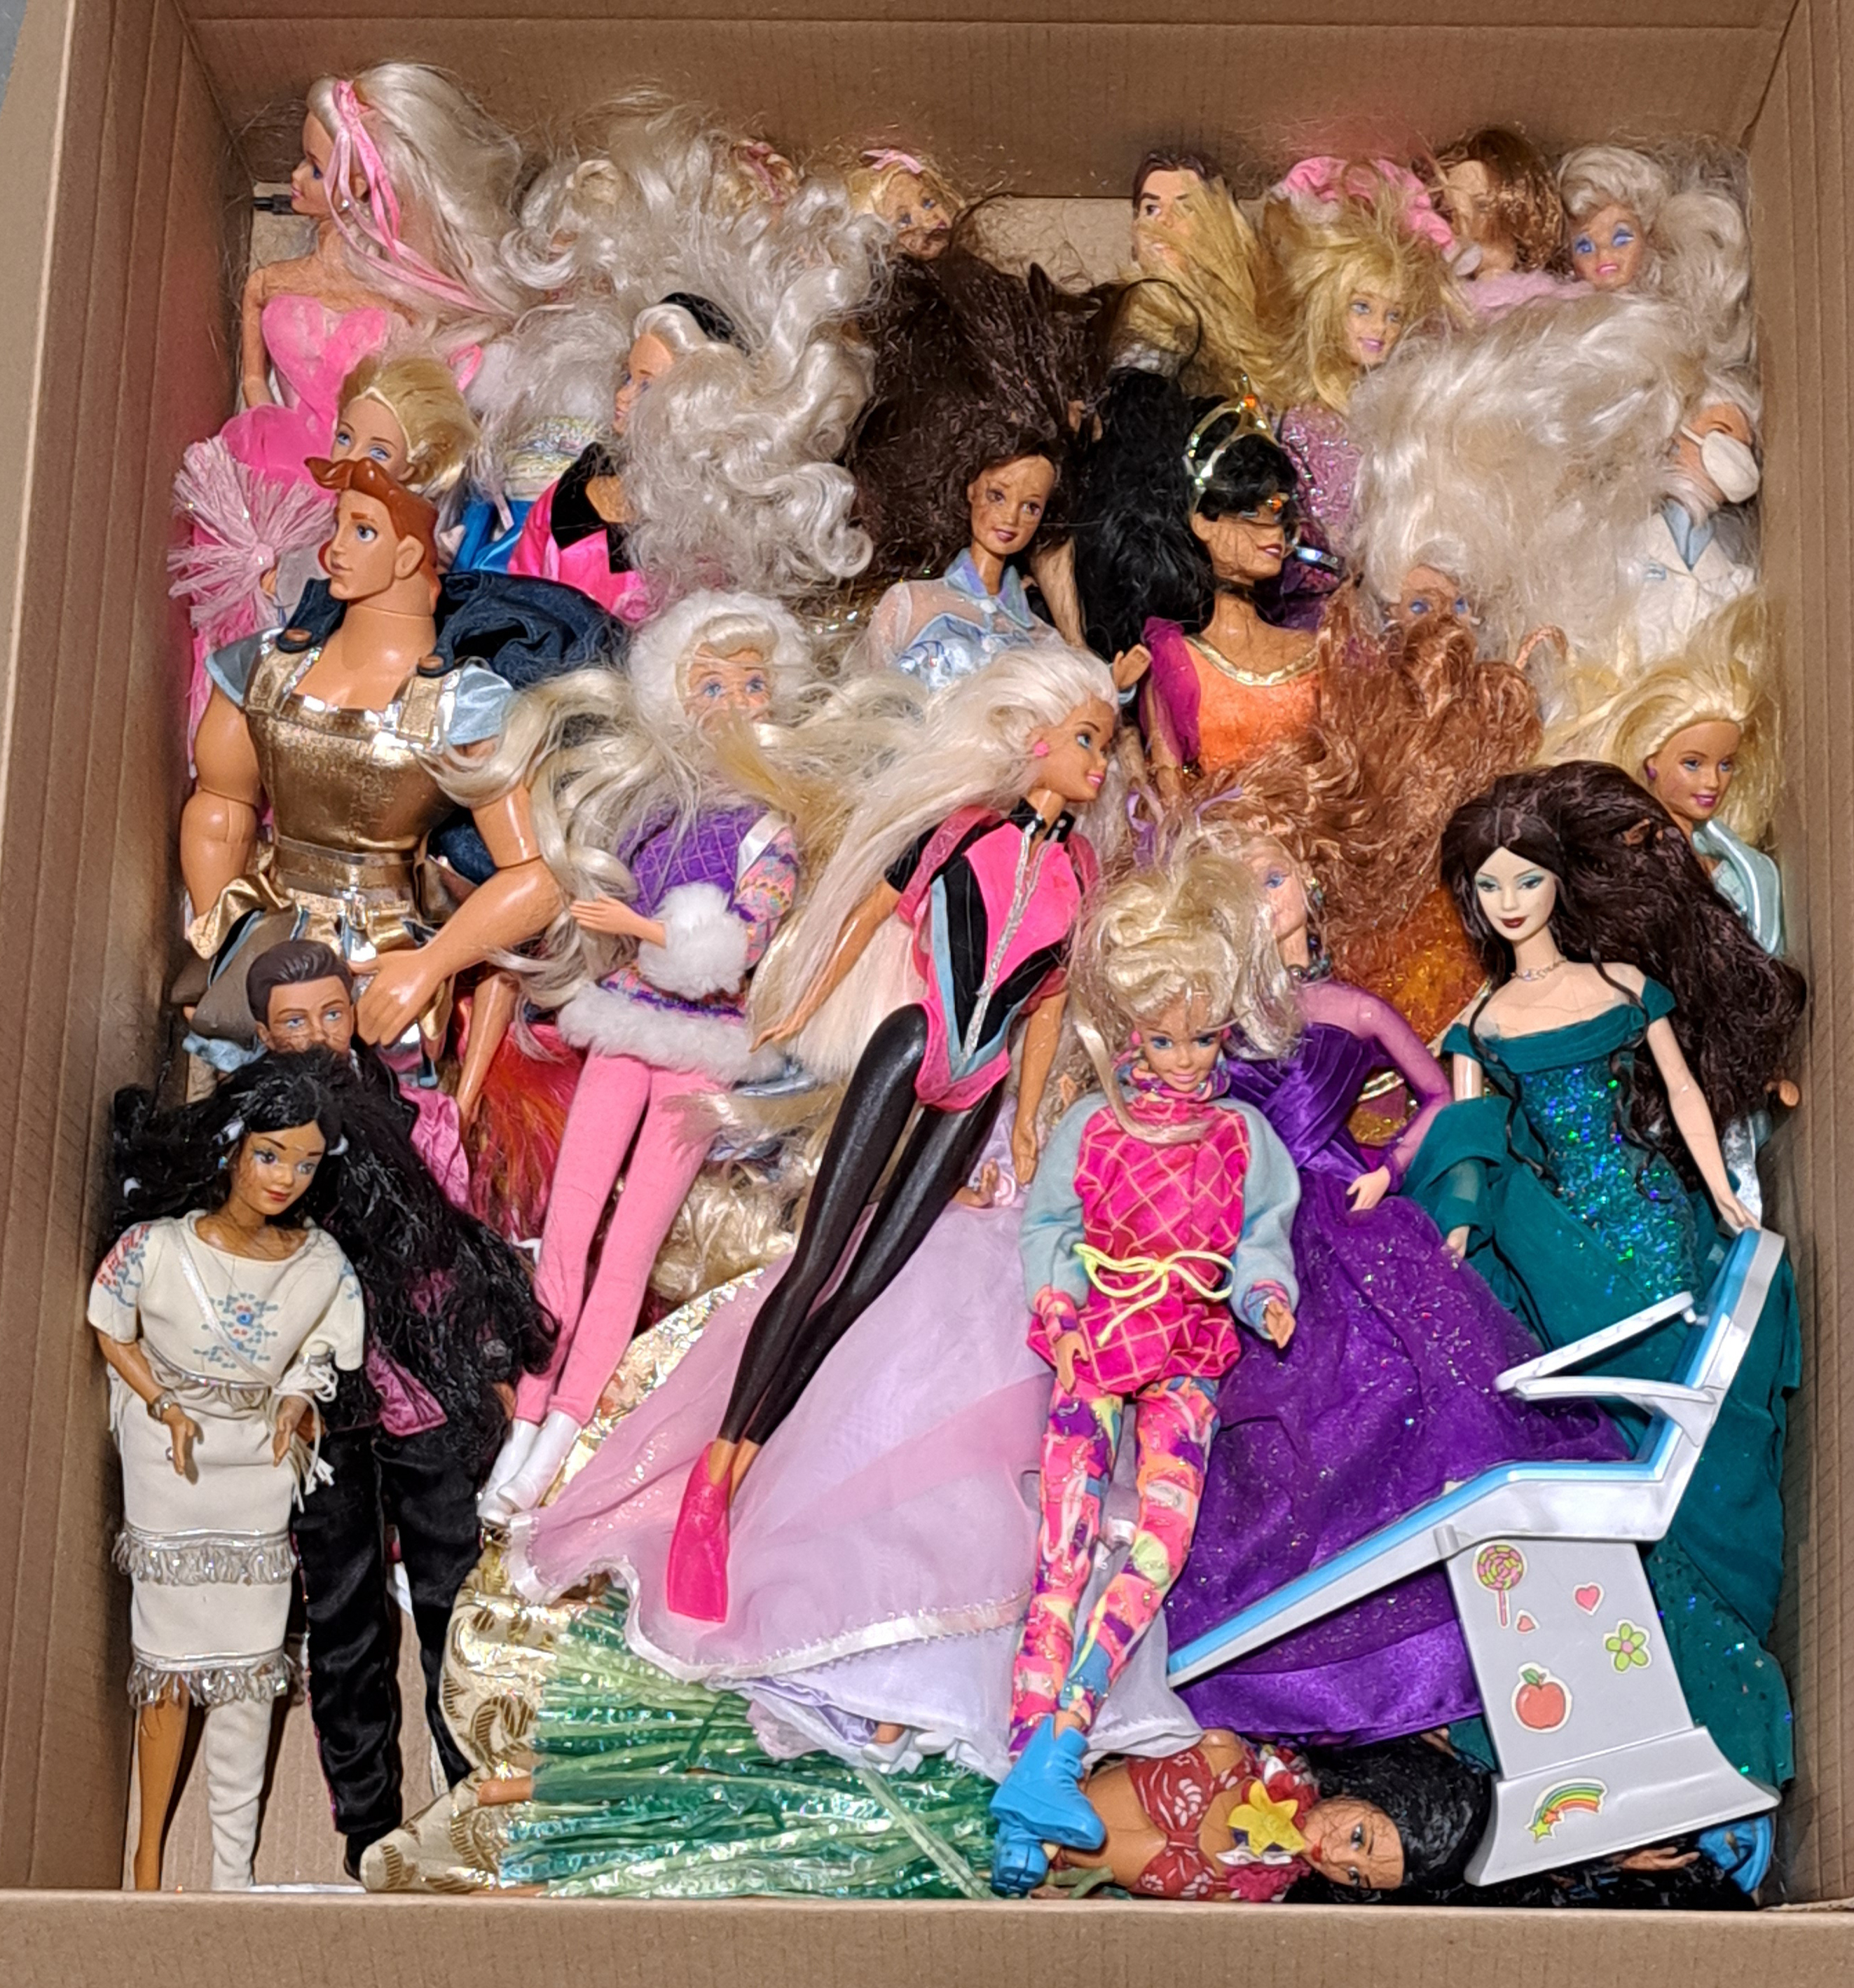 Mattel collection of modern Barbie dolls